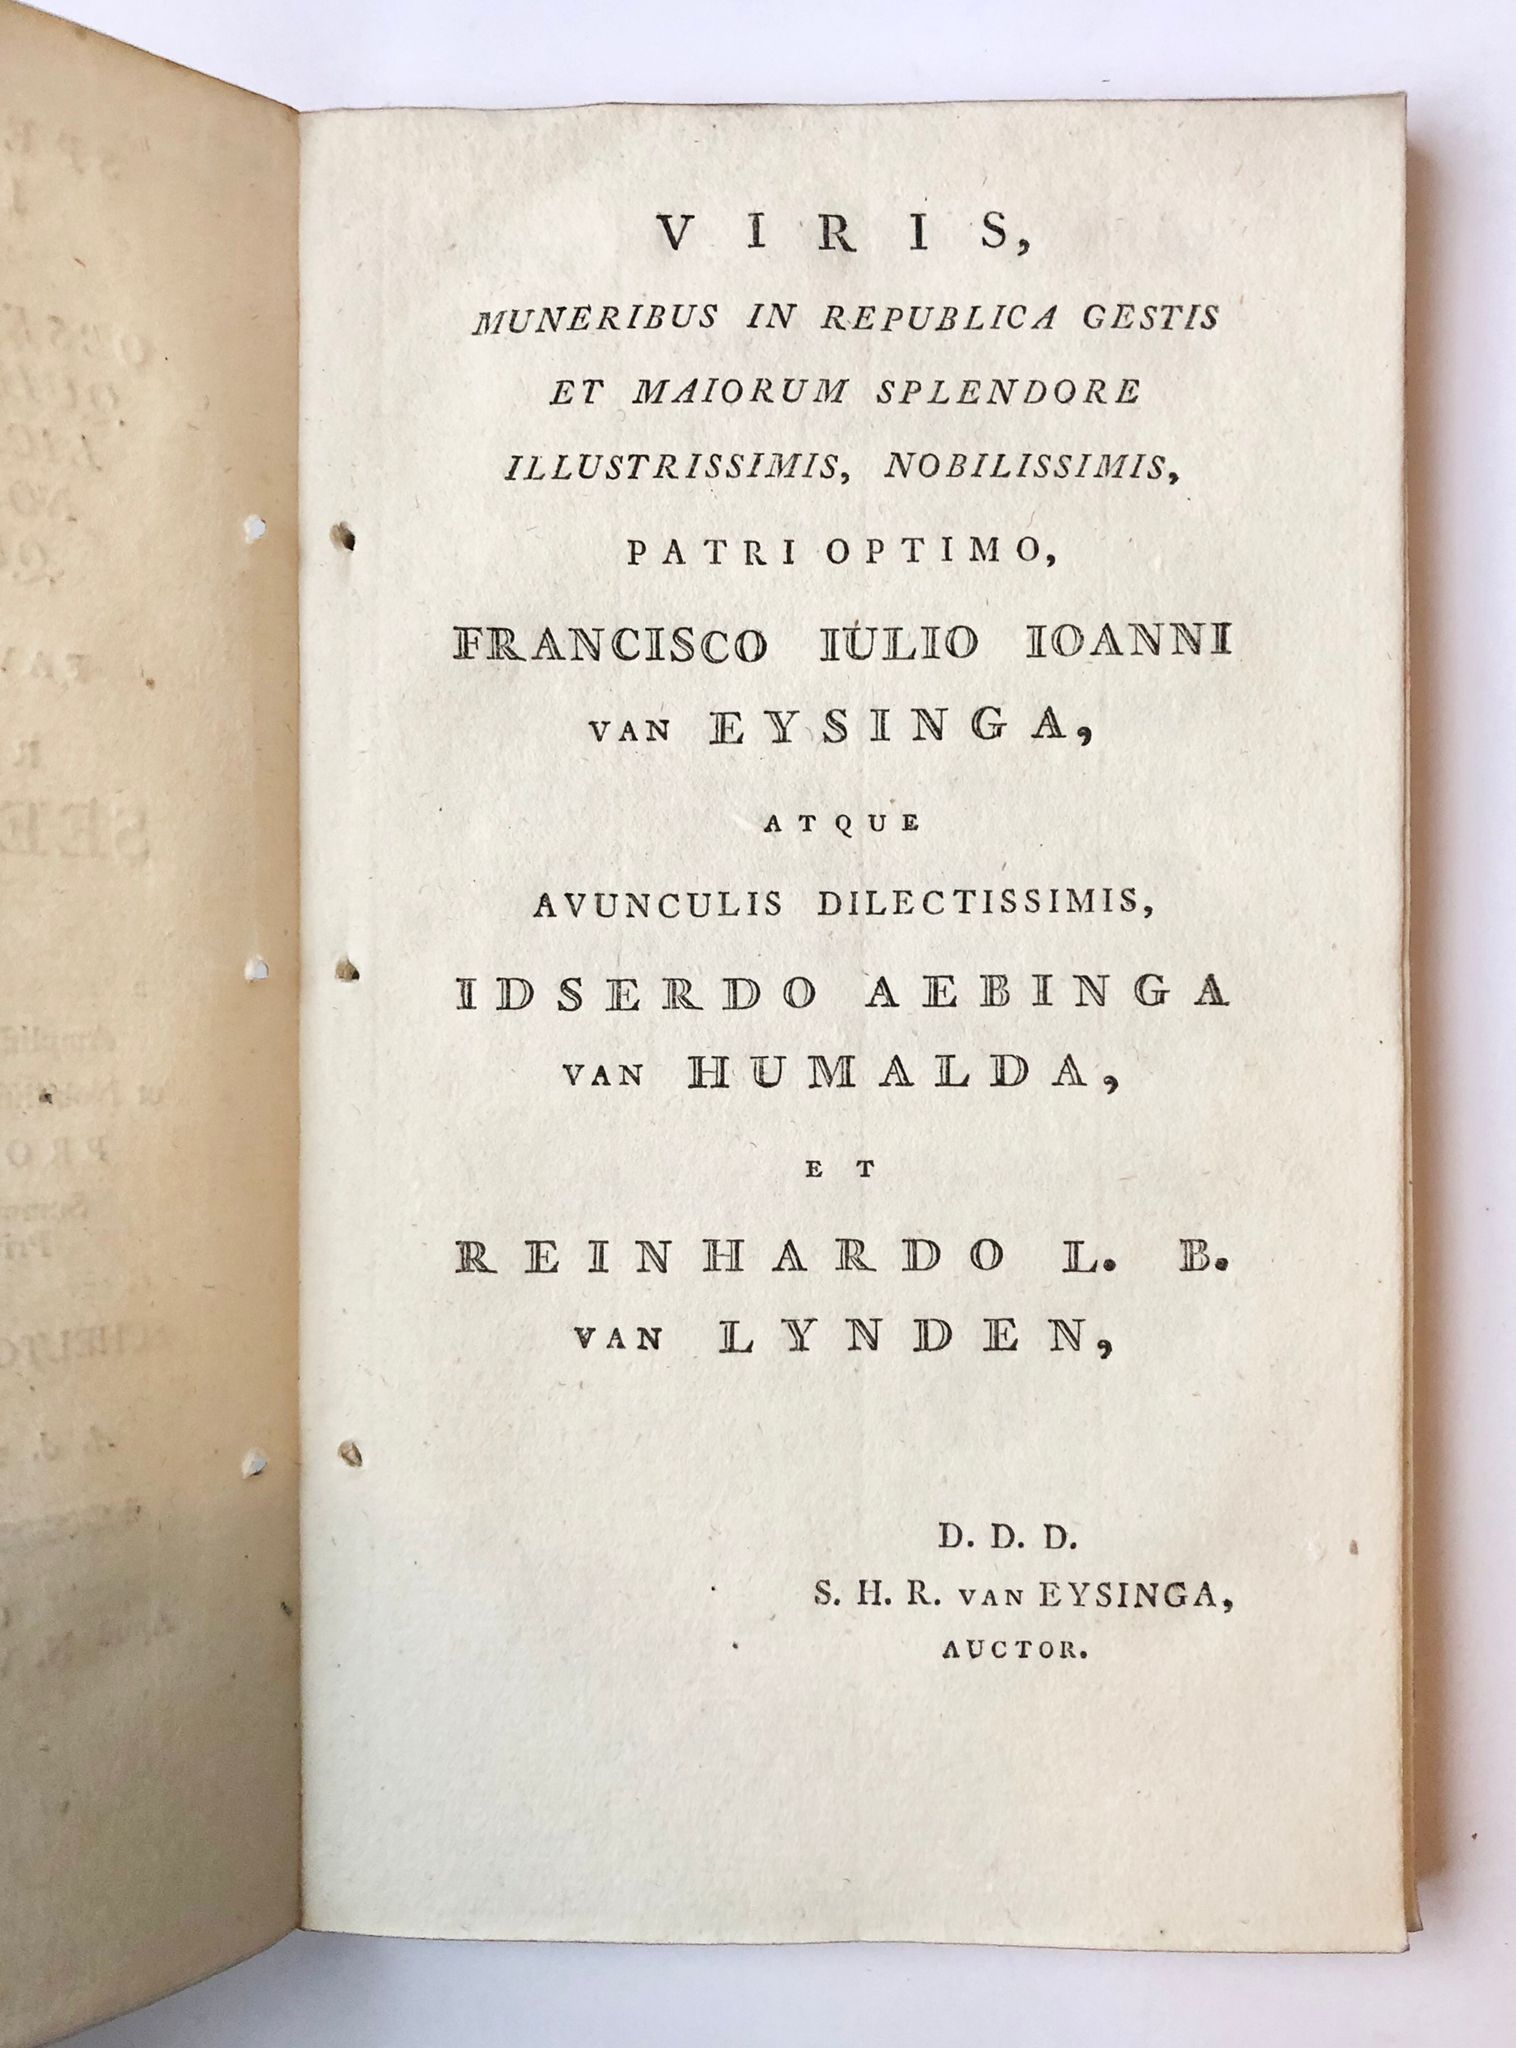 [Friesland, Groningae] Specimen iuridicum inaugurale (...), Pro gradu doctoratus, Schelto Hessel Roorda van Eysinga, N. Veenkamp et Filium, Groningae, 1804, 89 pp.